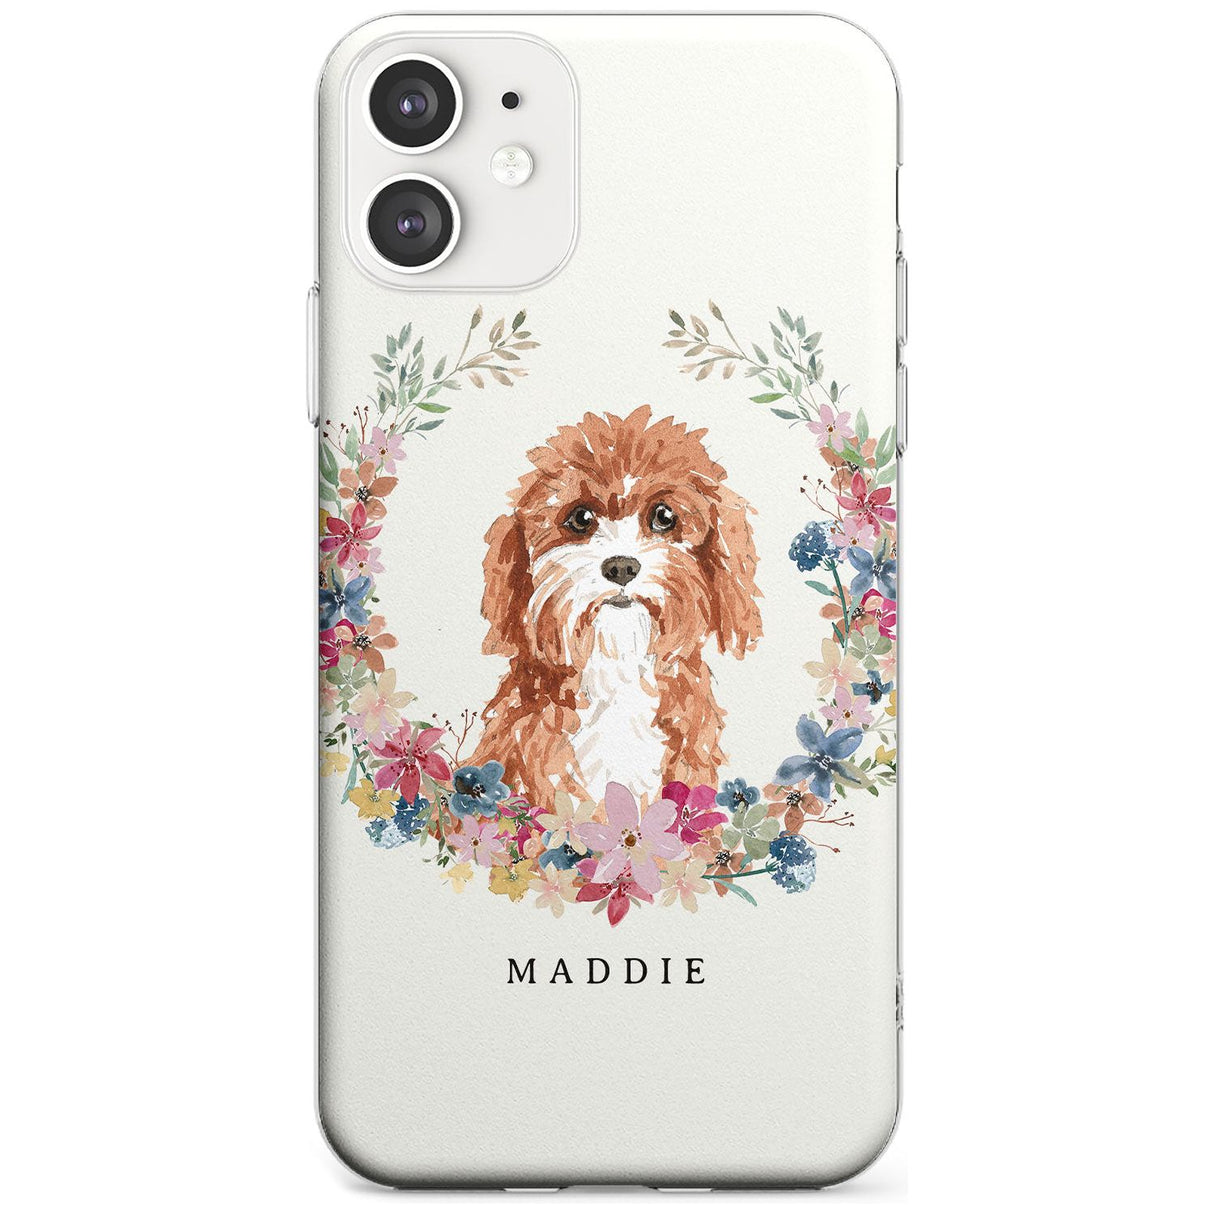 Cavapoo - Watercolour Dog Portrait Slim TPU Phone Case for iPhone 11